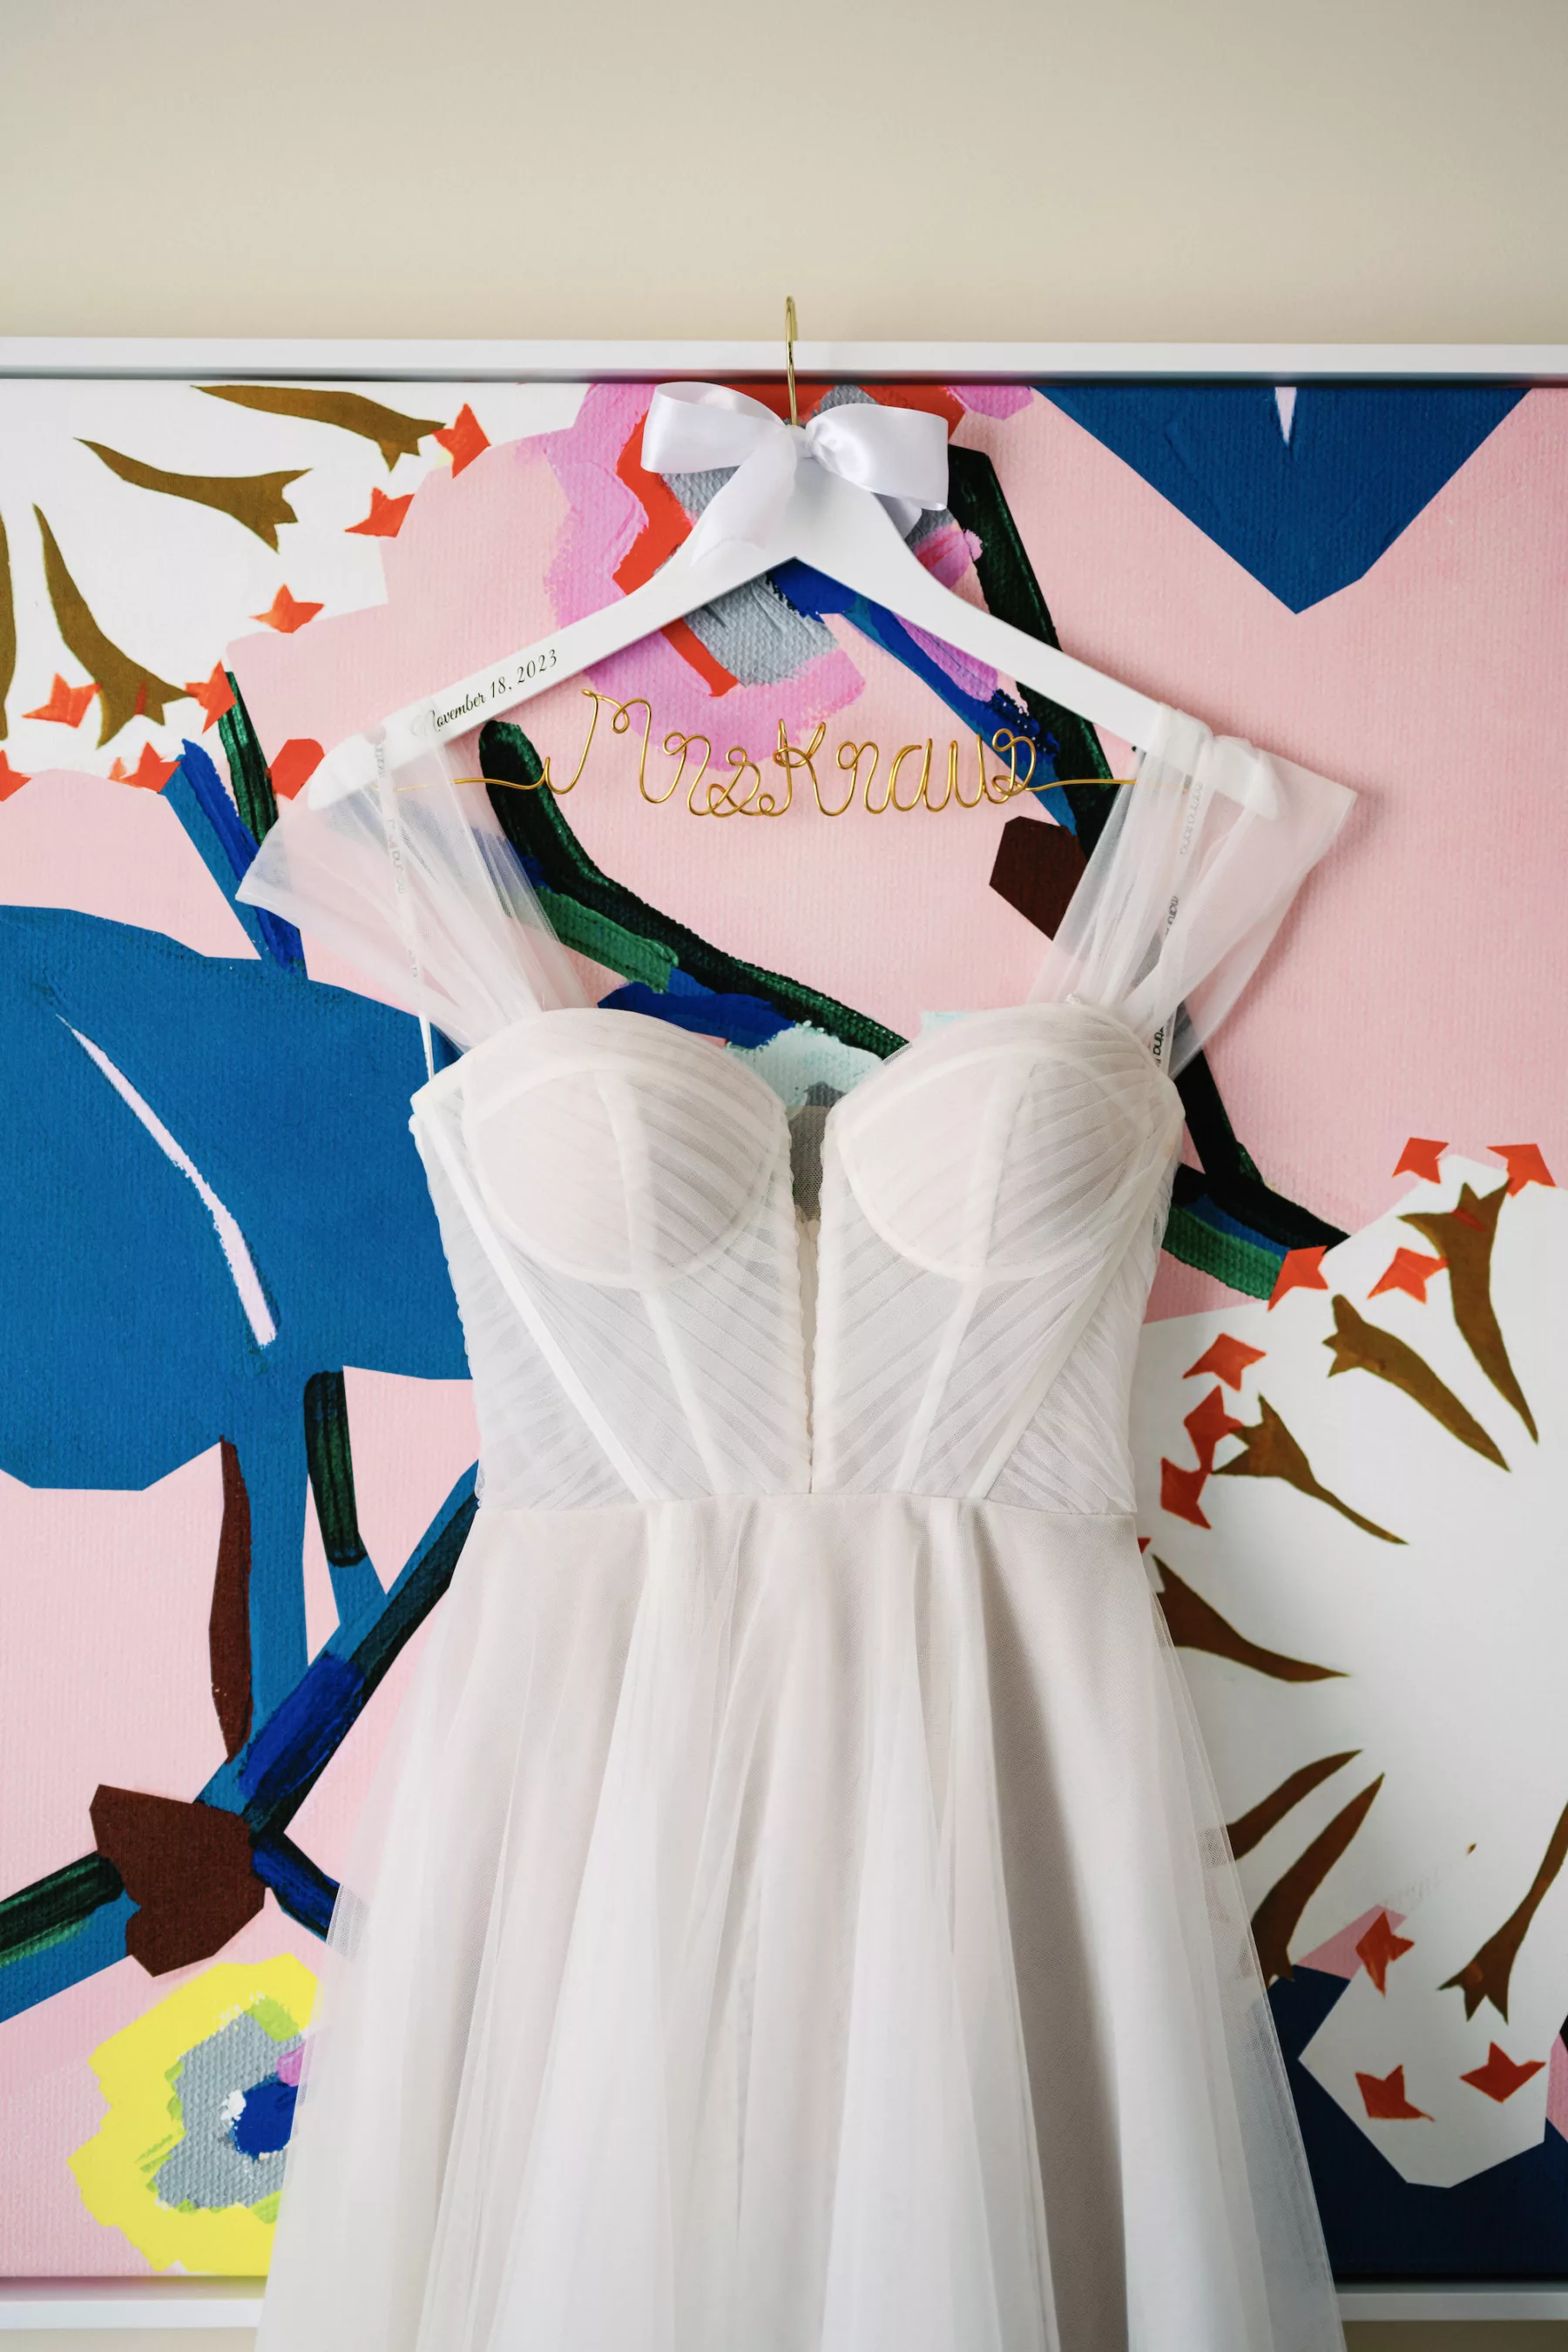 Ivory Off The Shoulder Boned Bodice Chiffon A Line Martina Liana Wedding Dress Inspiration